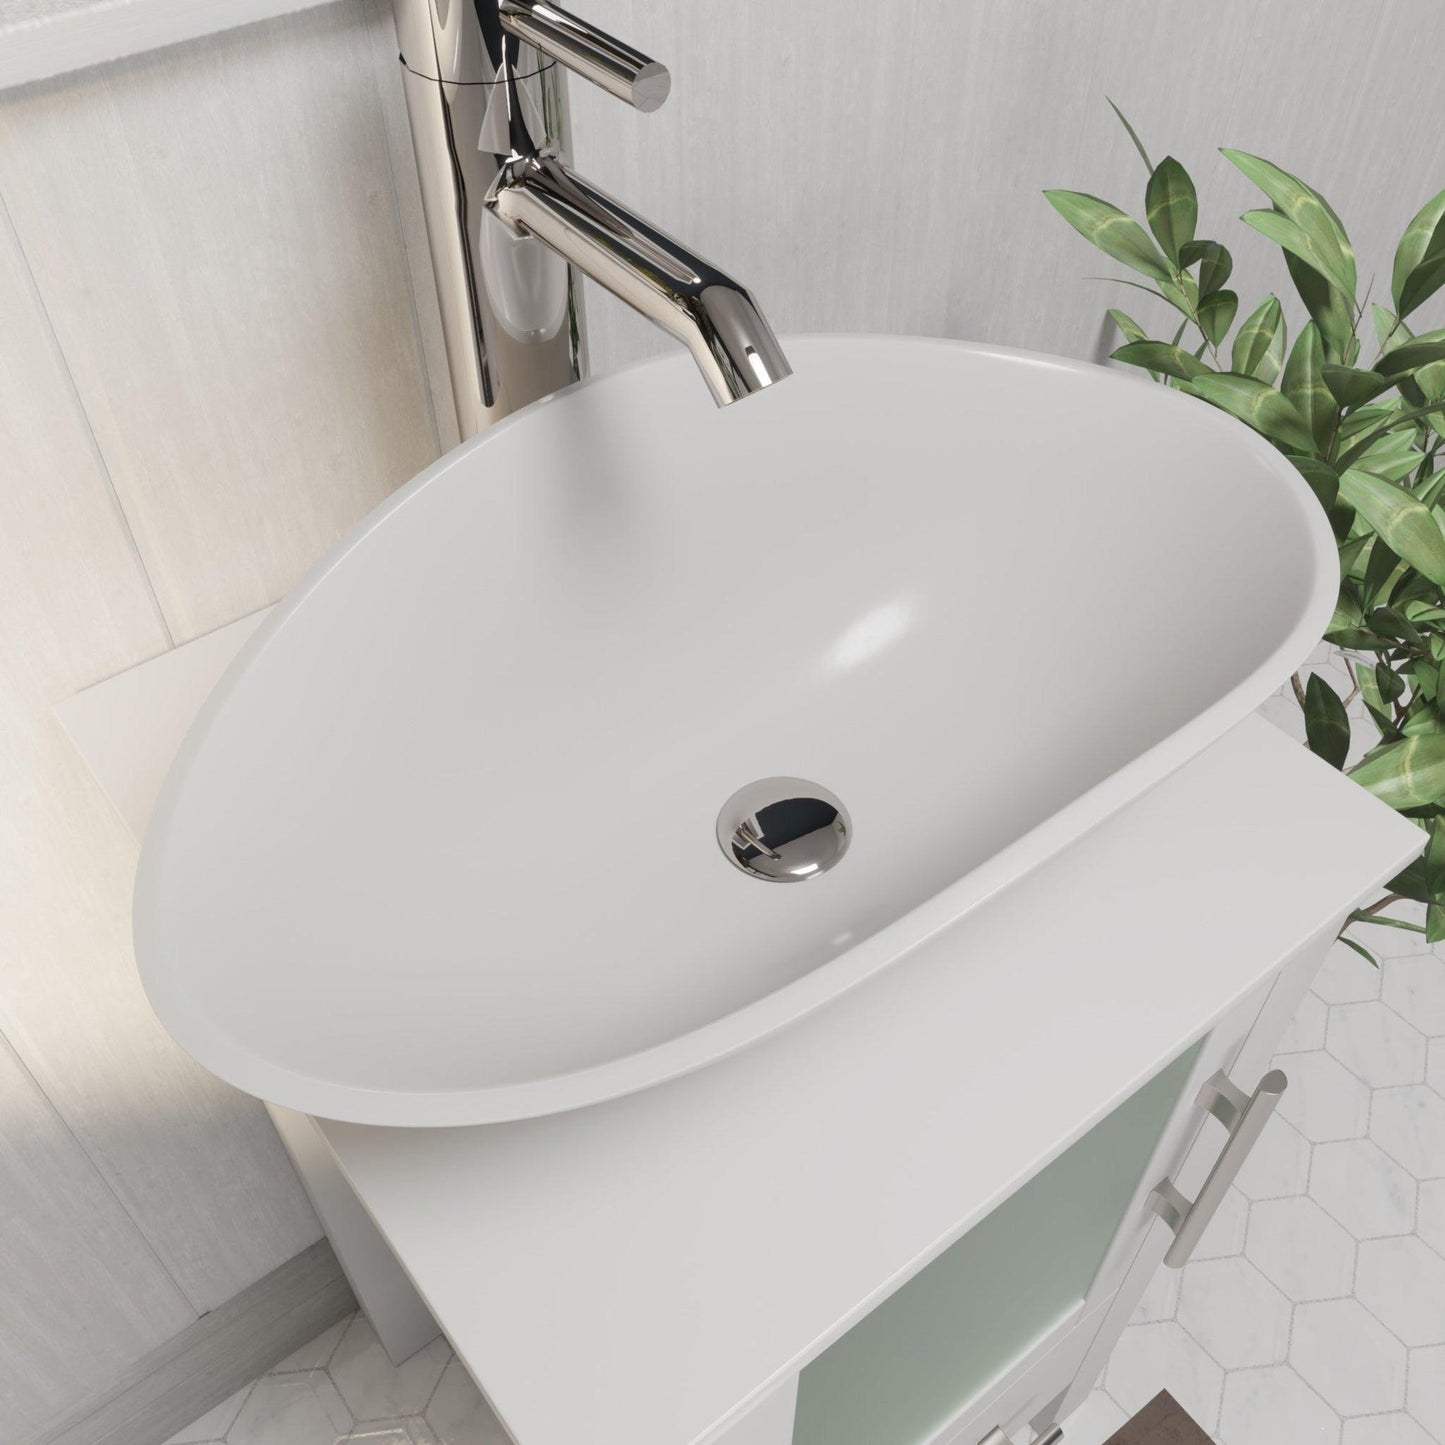 Cambridge Plumbing 24" White Mineral Composite Bathroom Oval Vessel Bathroom Sink